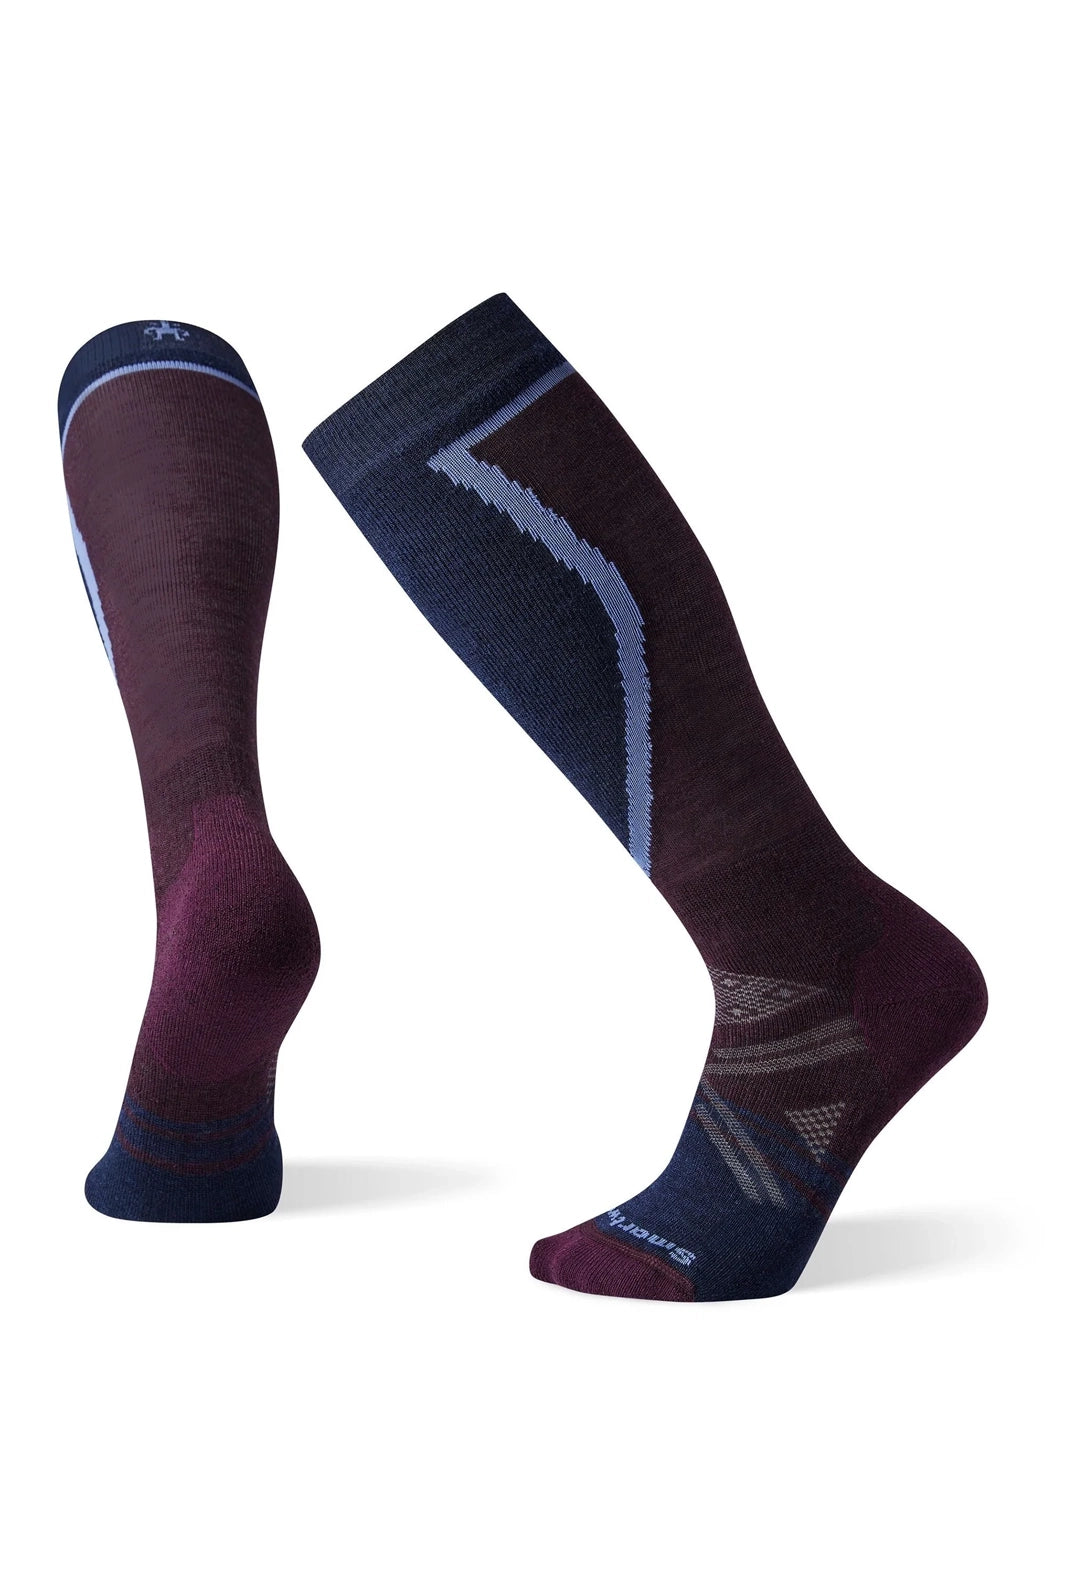 PhD® Ski Medium knee-high socks with Smartwool pattern